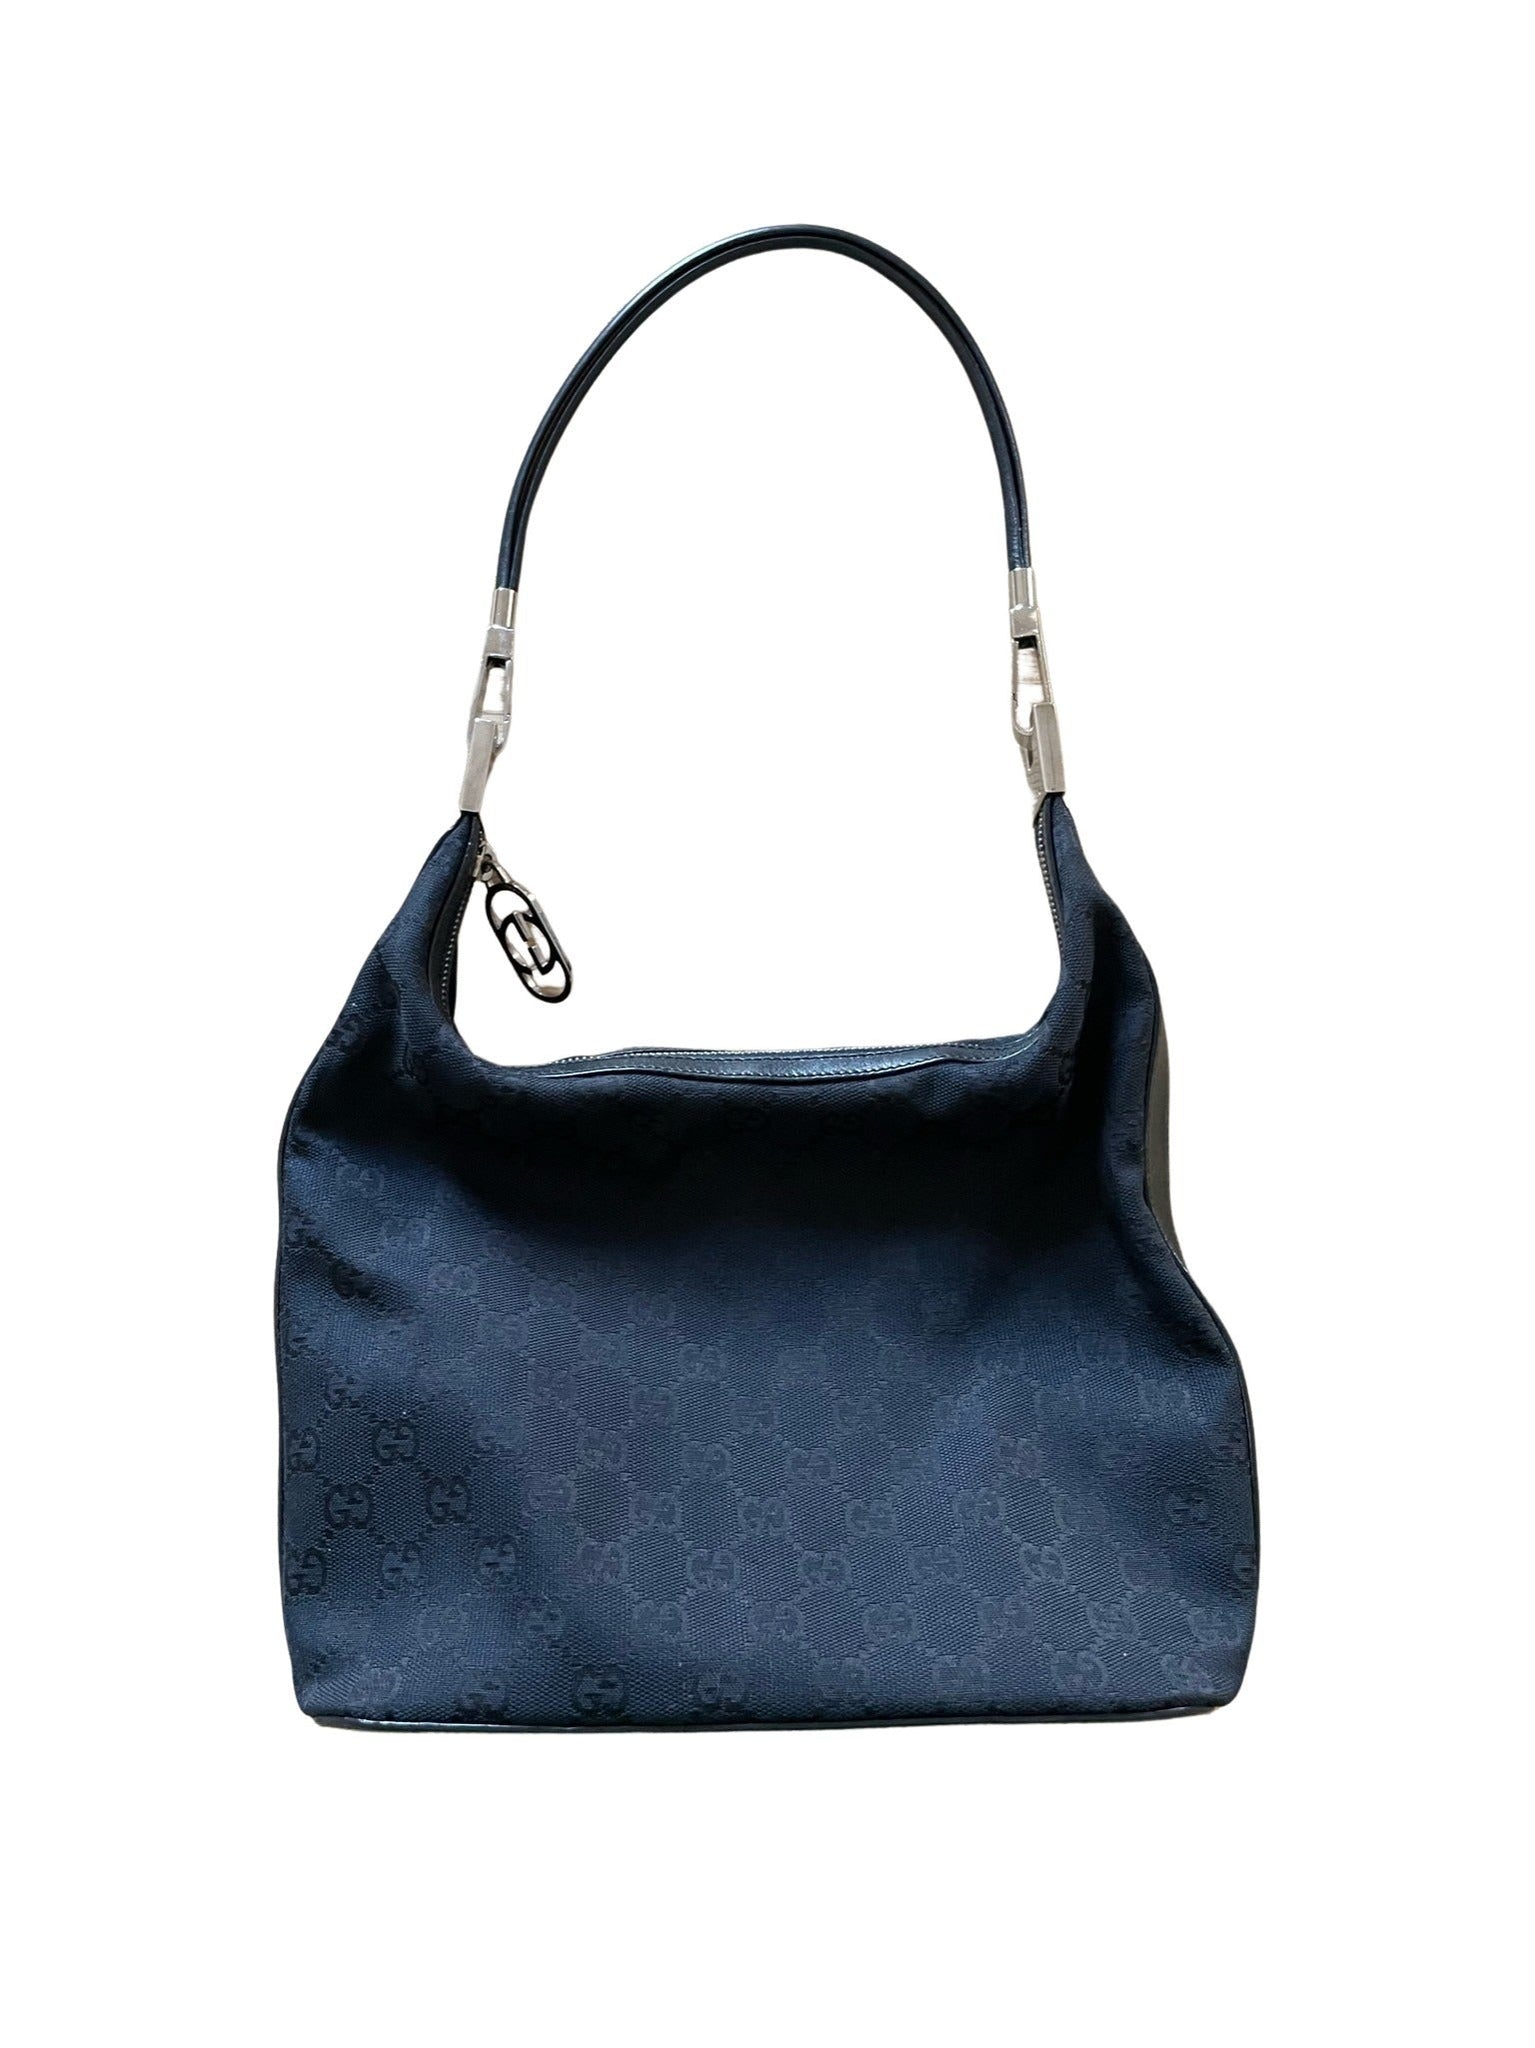 Gucci Black Jacquard Leather Shoulder Bag – Kilta Bags